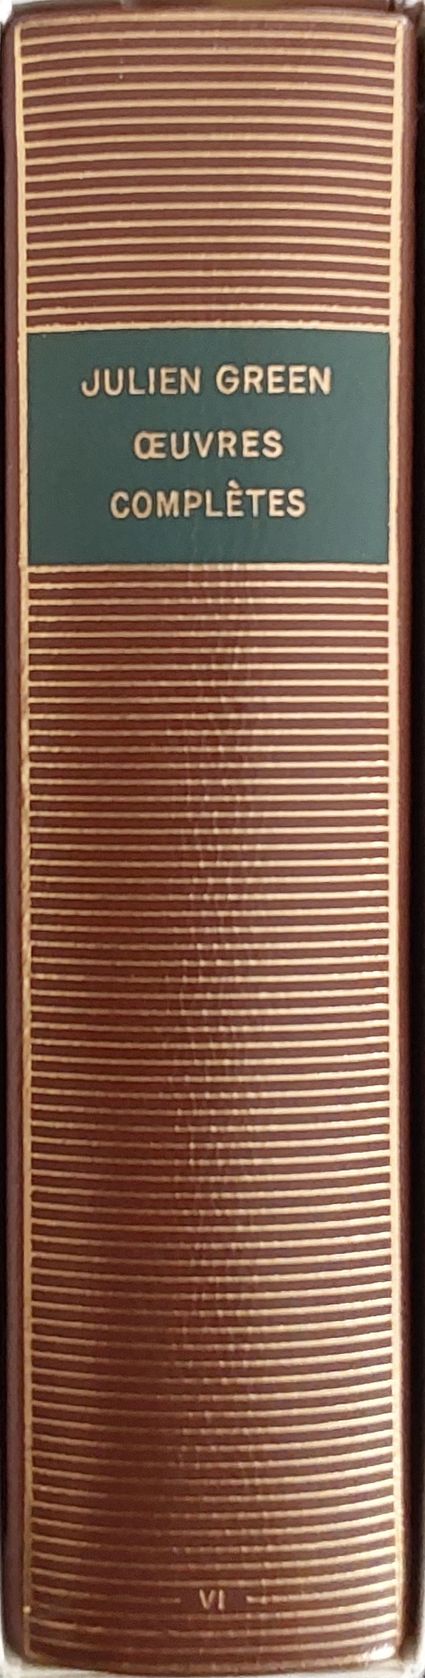 Volume 366 de Julien Green dans la Bibliothèque de la Pléiade.